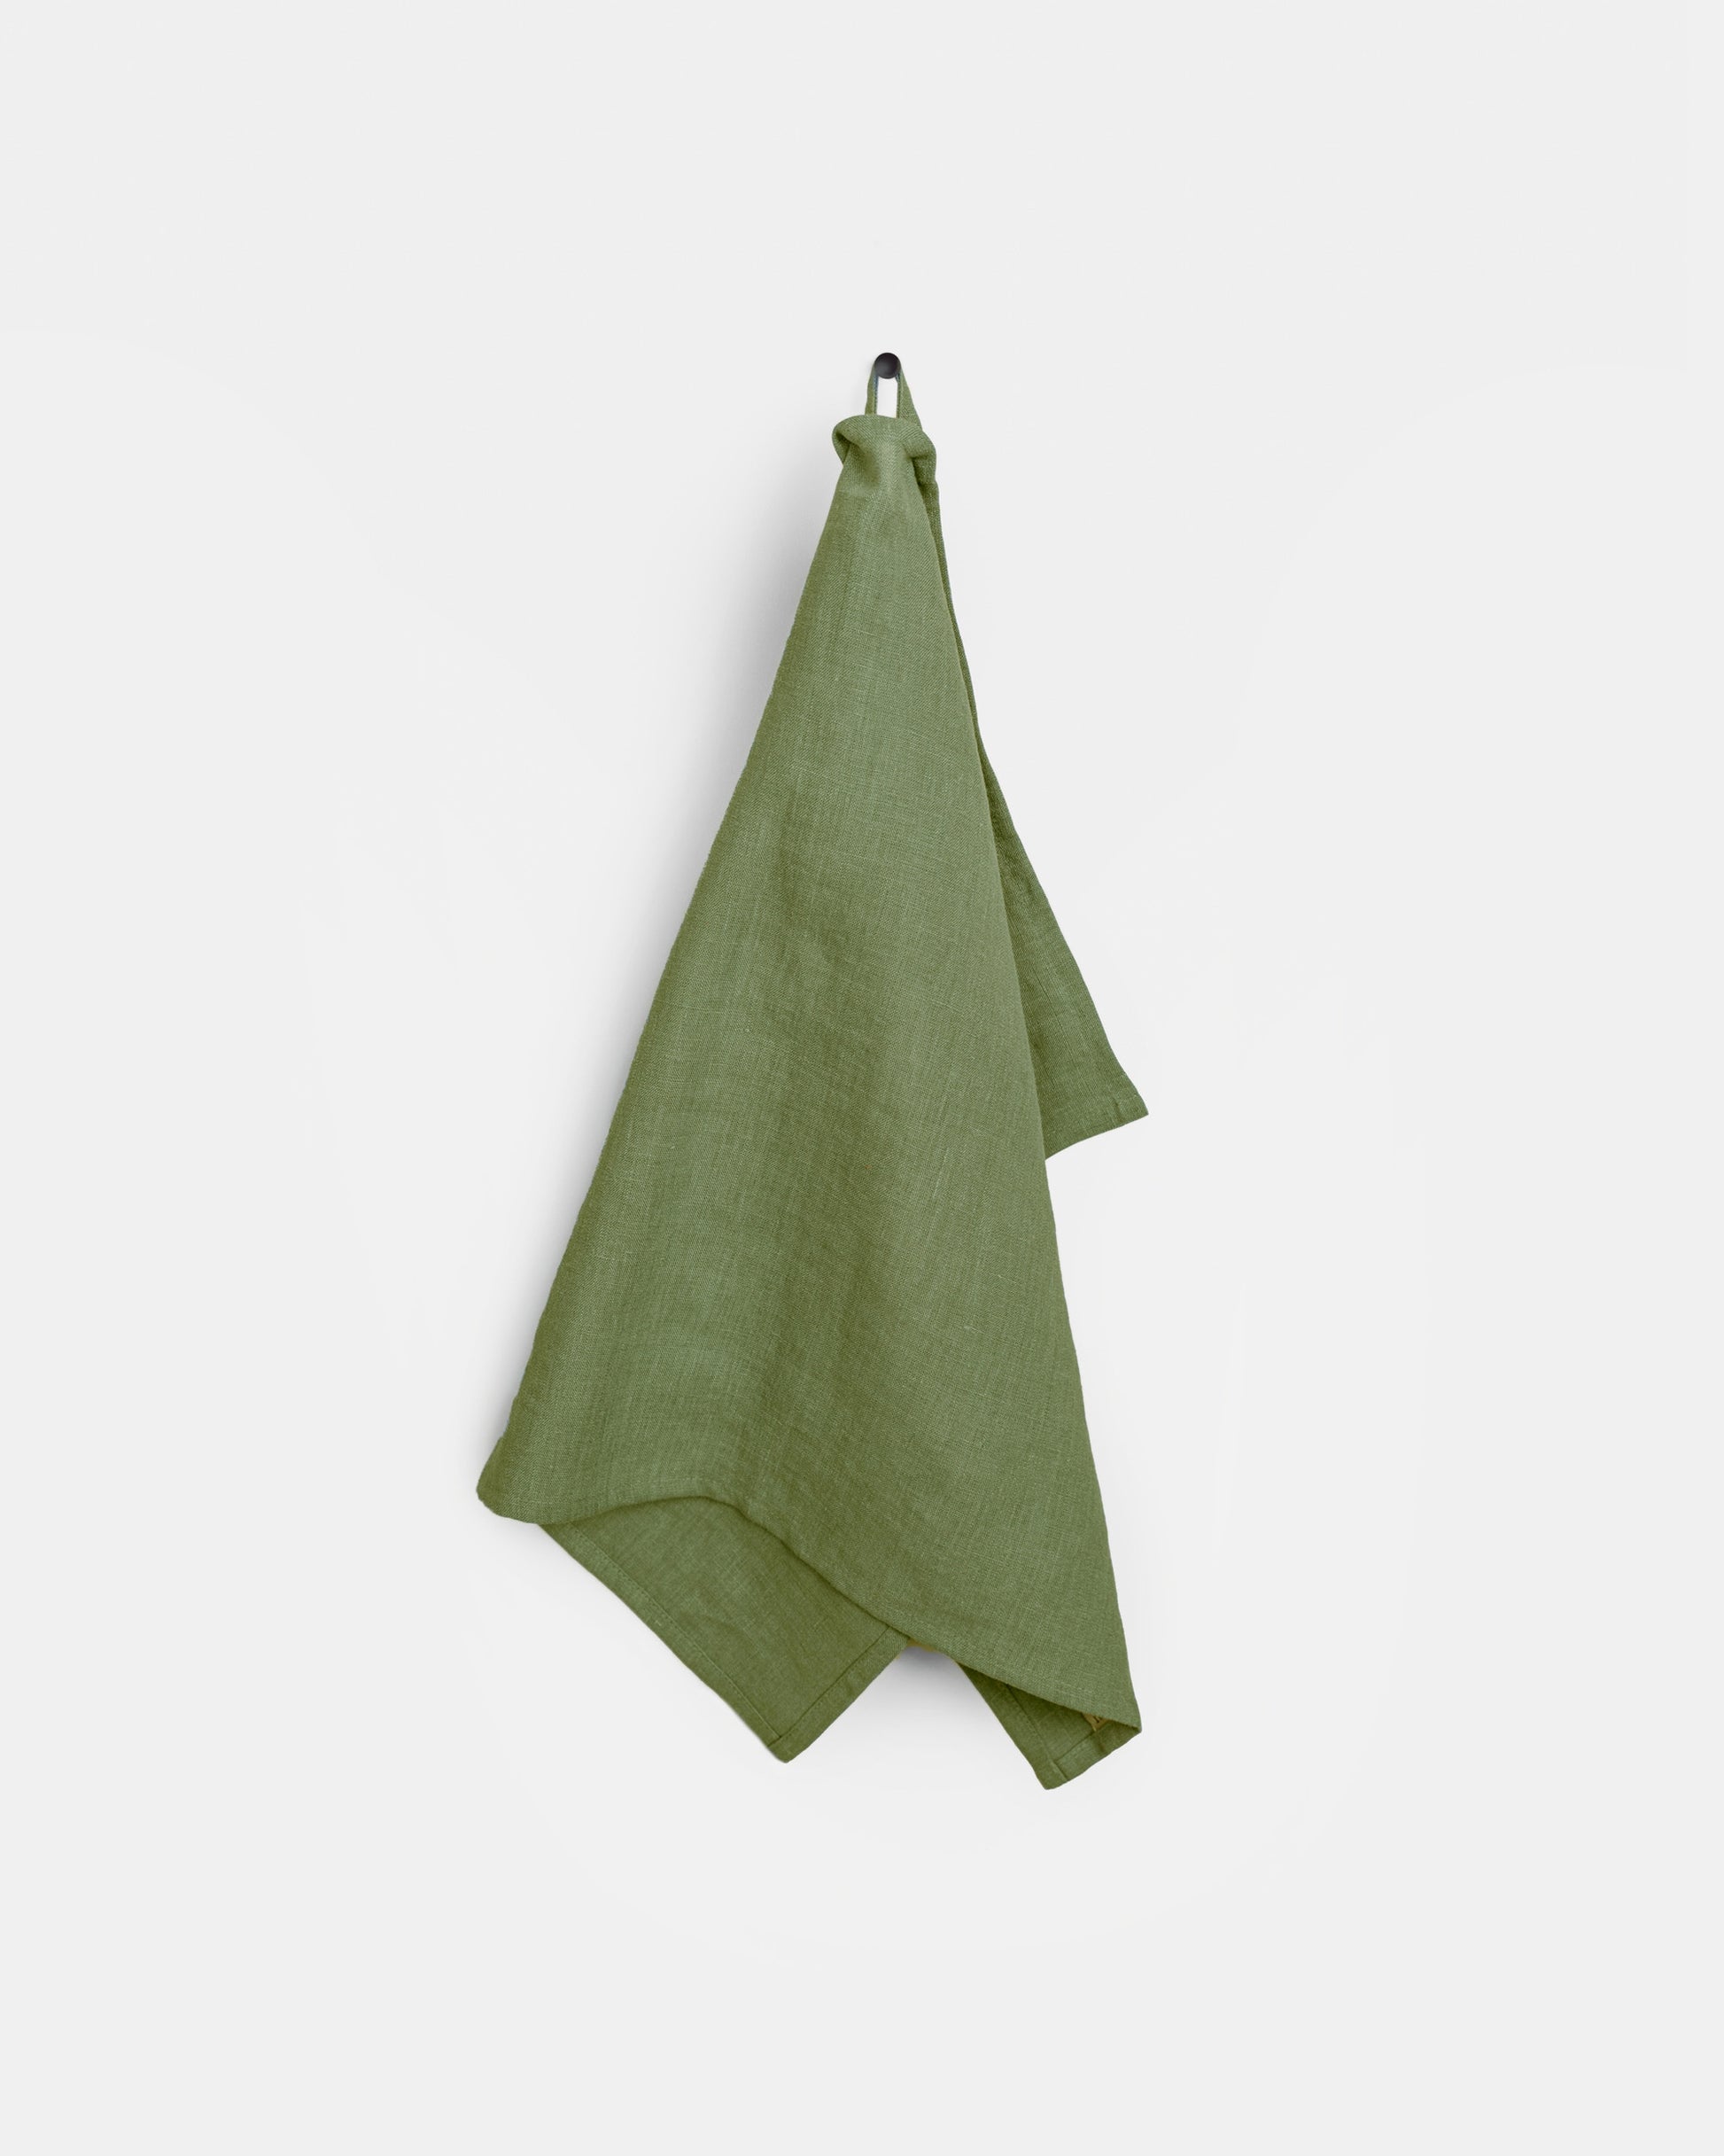 Botanical Green Gingham Linen Tea Towel